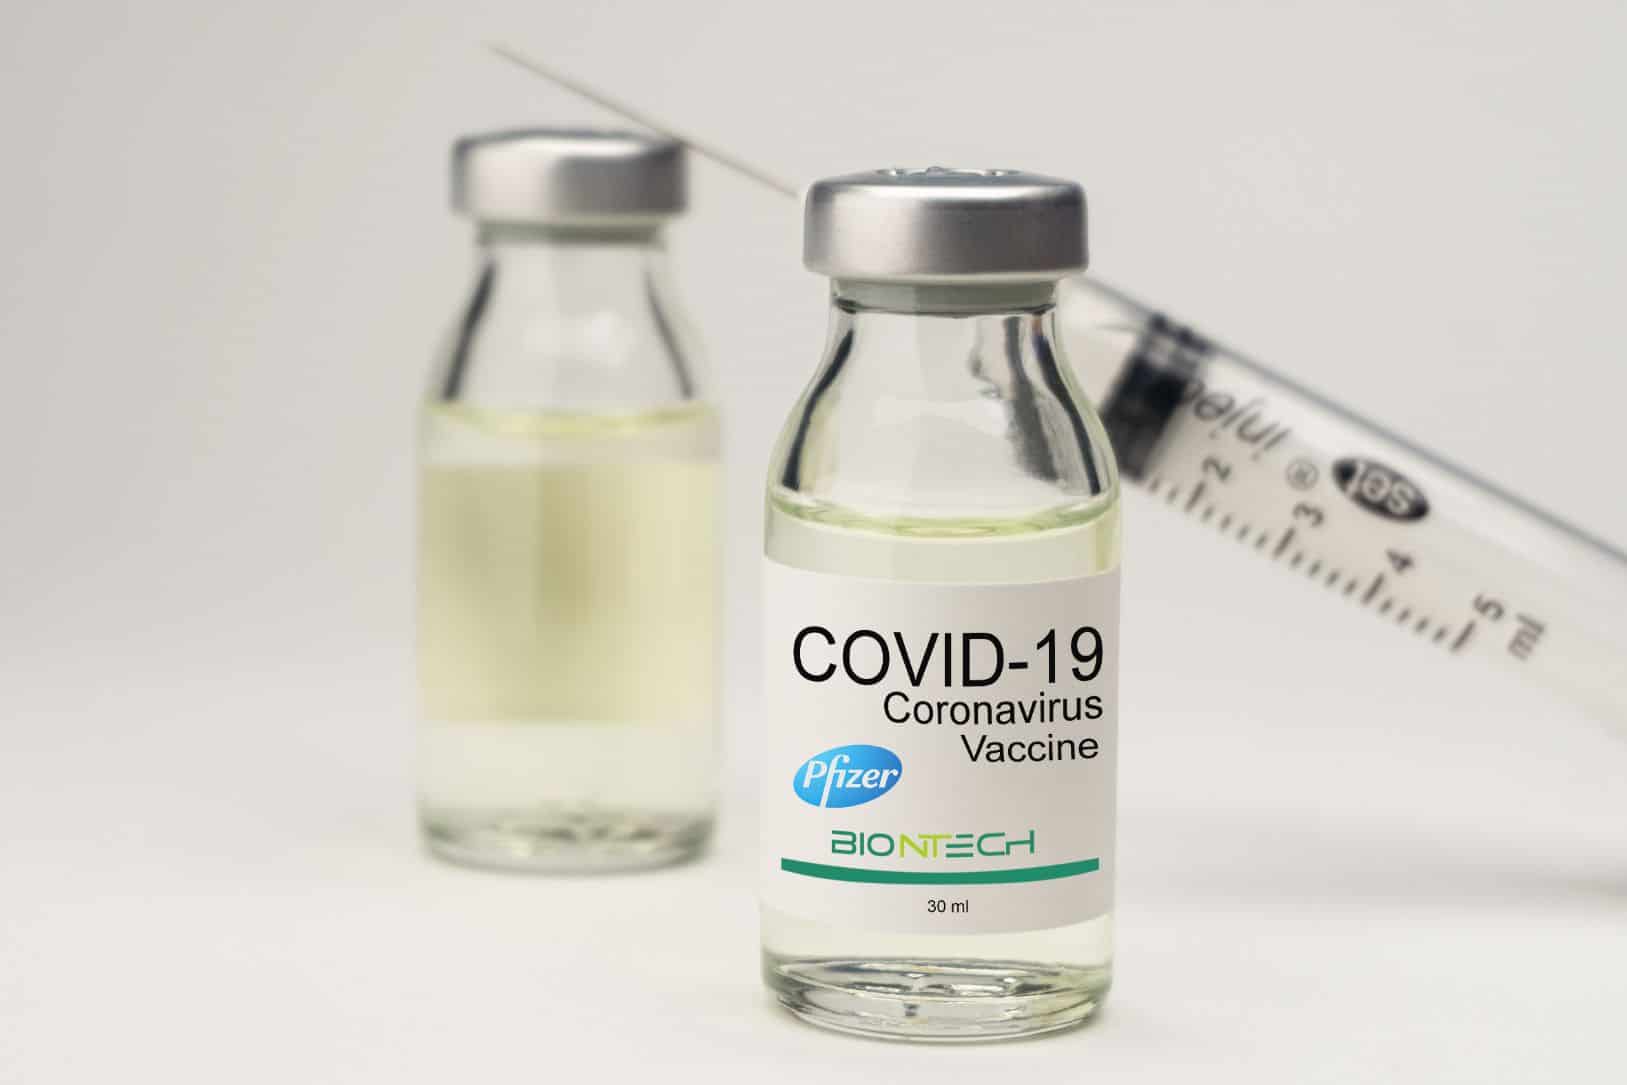 Winchester Gardens offers Covid vaccine clinic